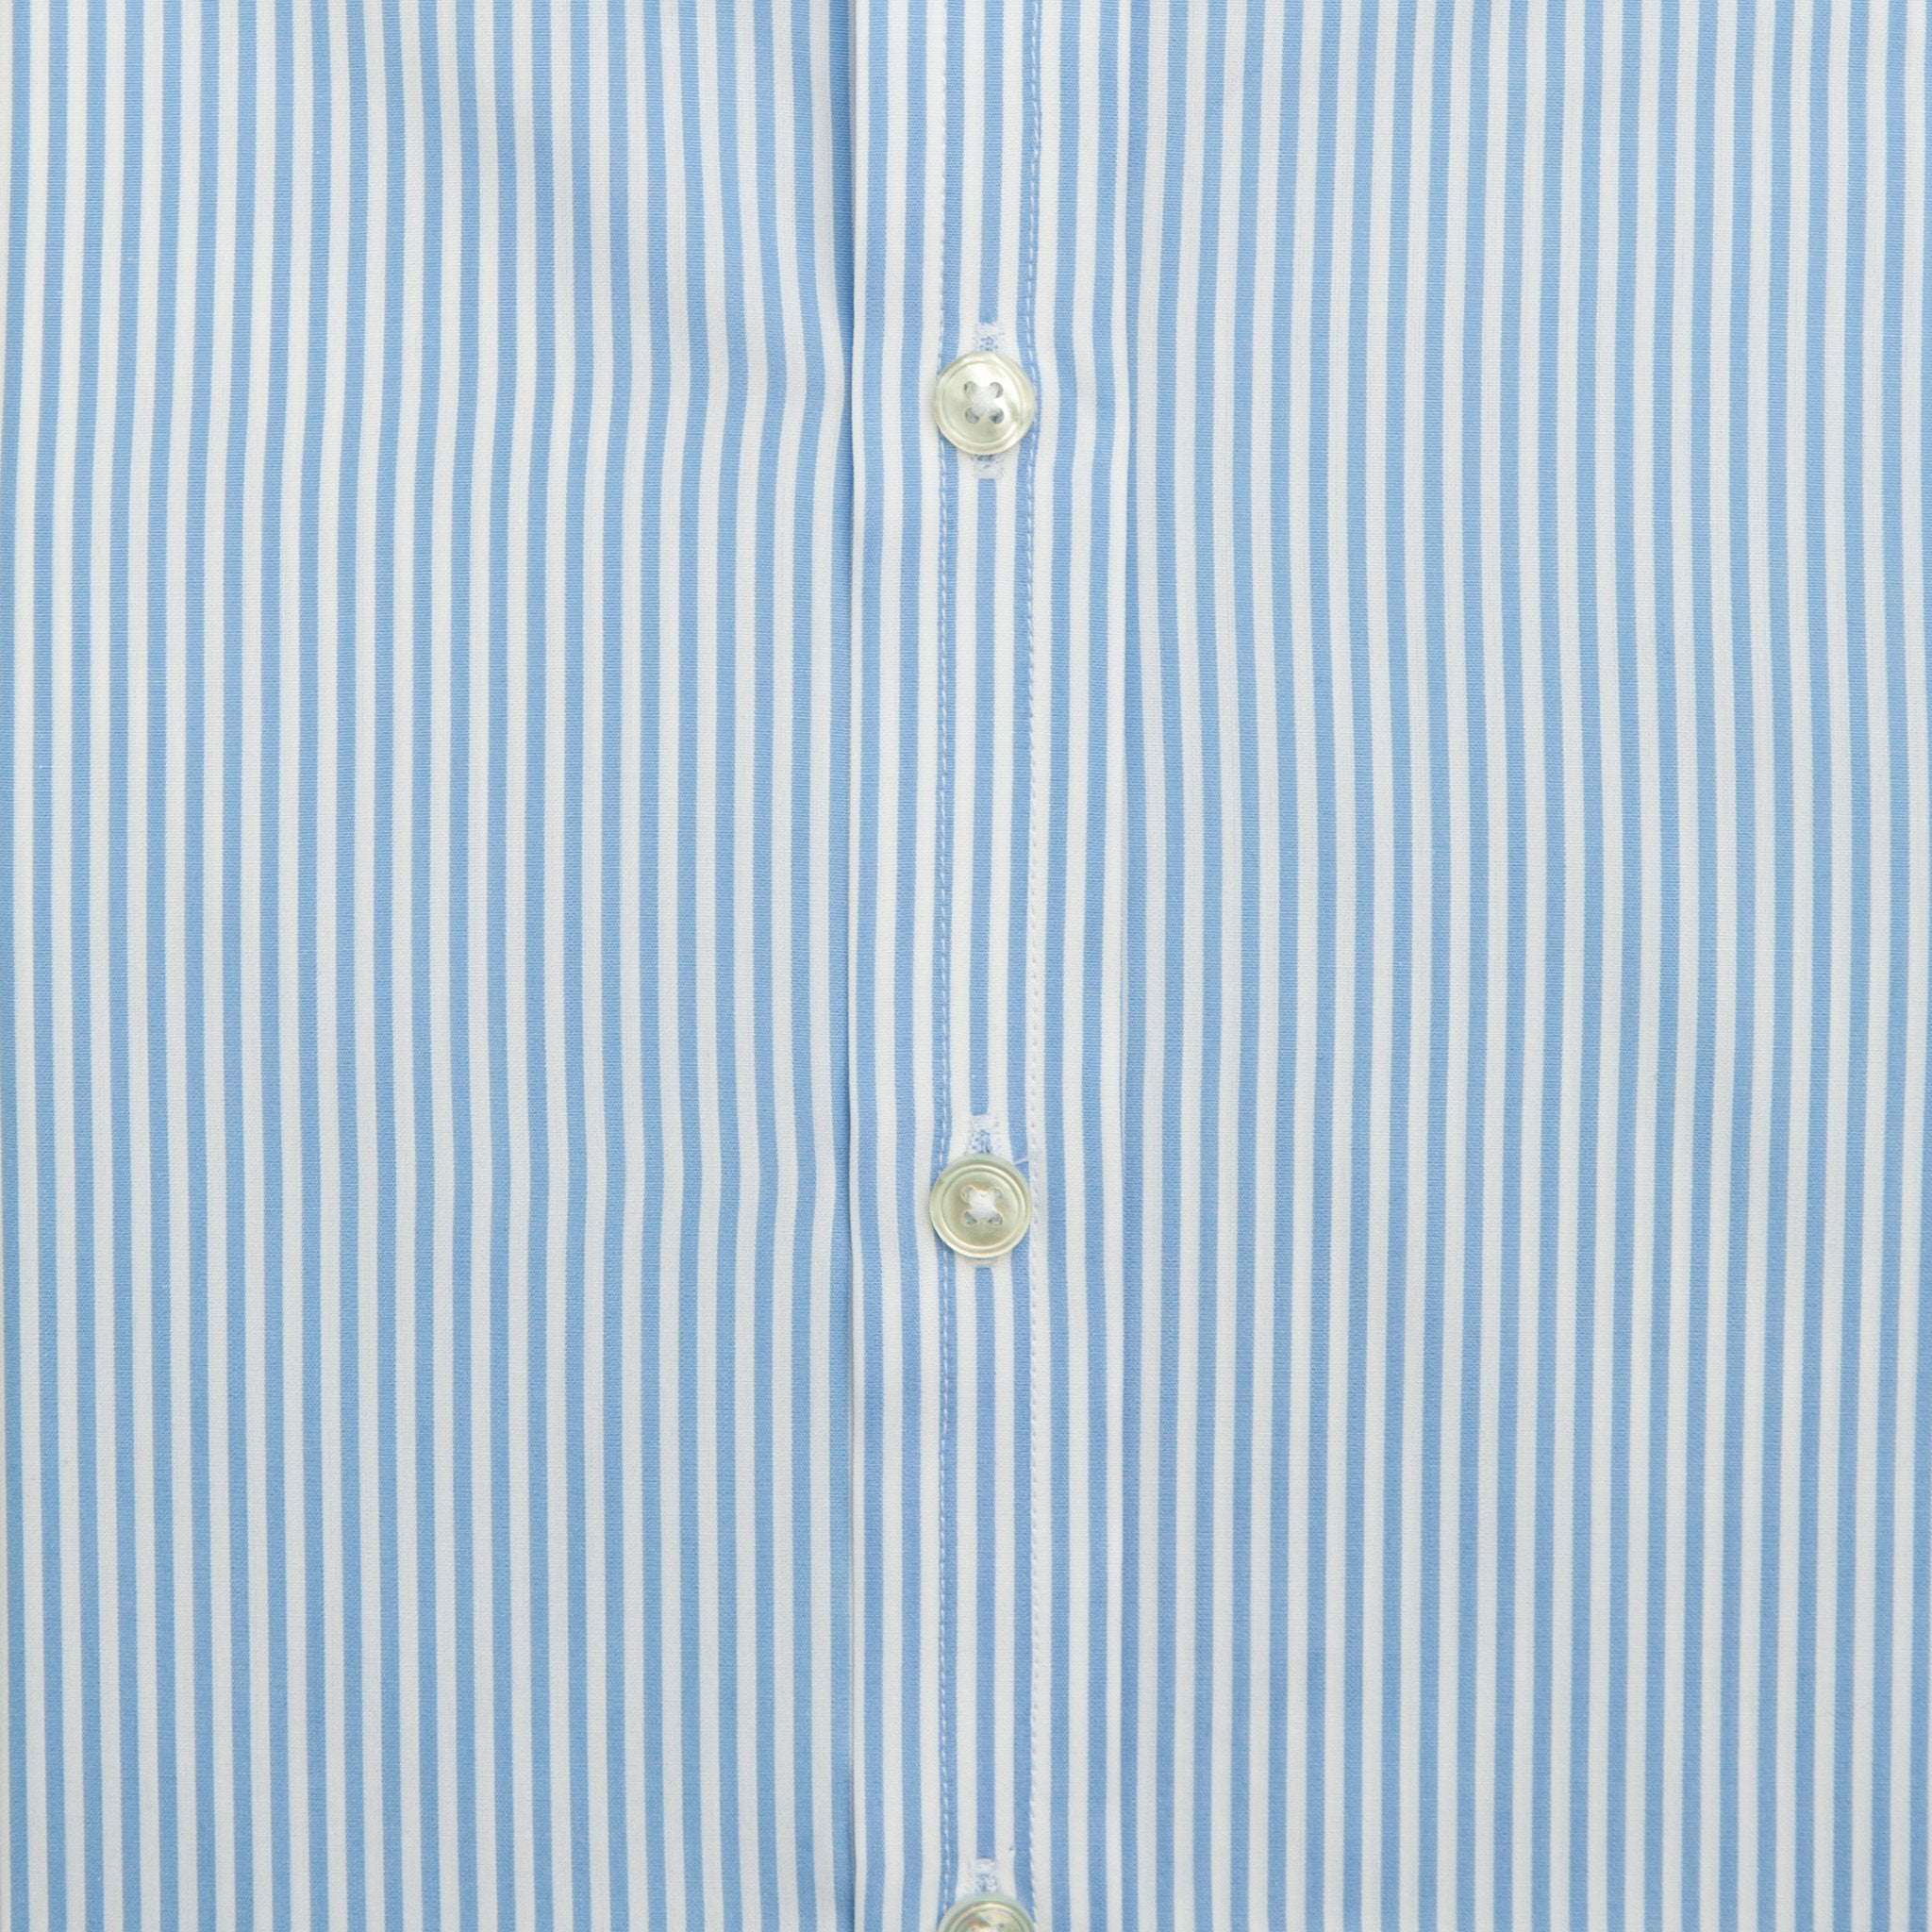 Sky Bengal Stripe Cotton Shirt - Bespoke freeshipping - Emma Willis